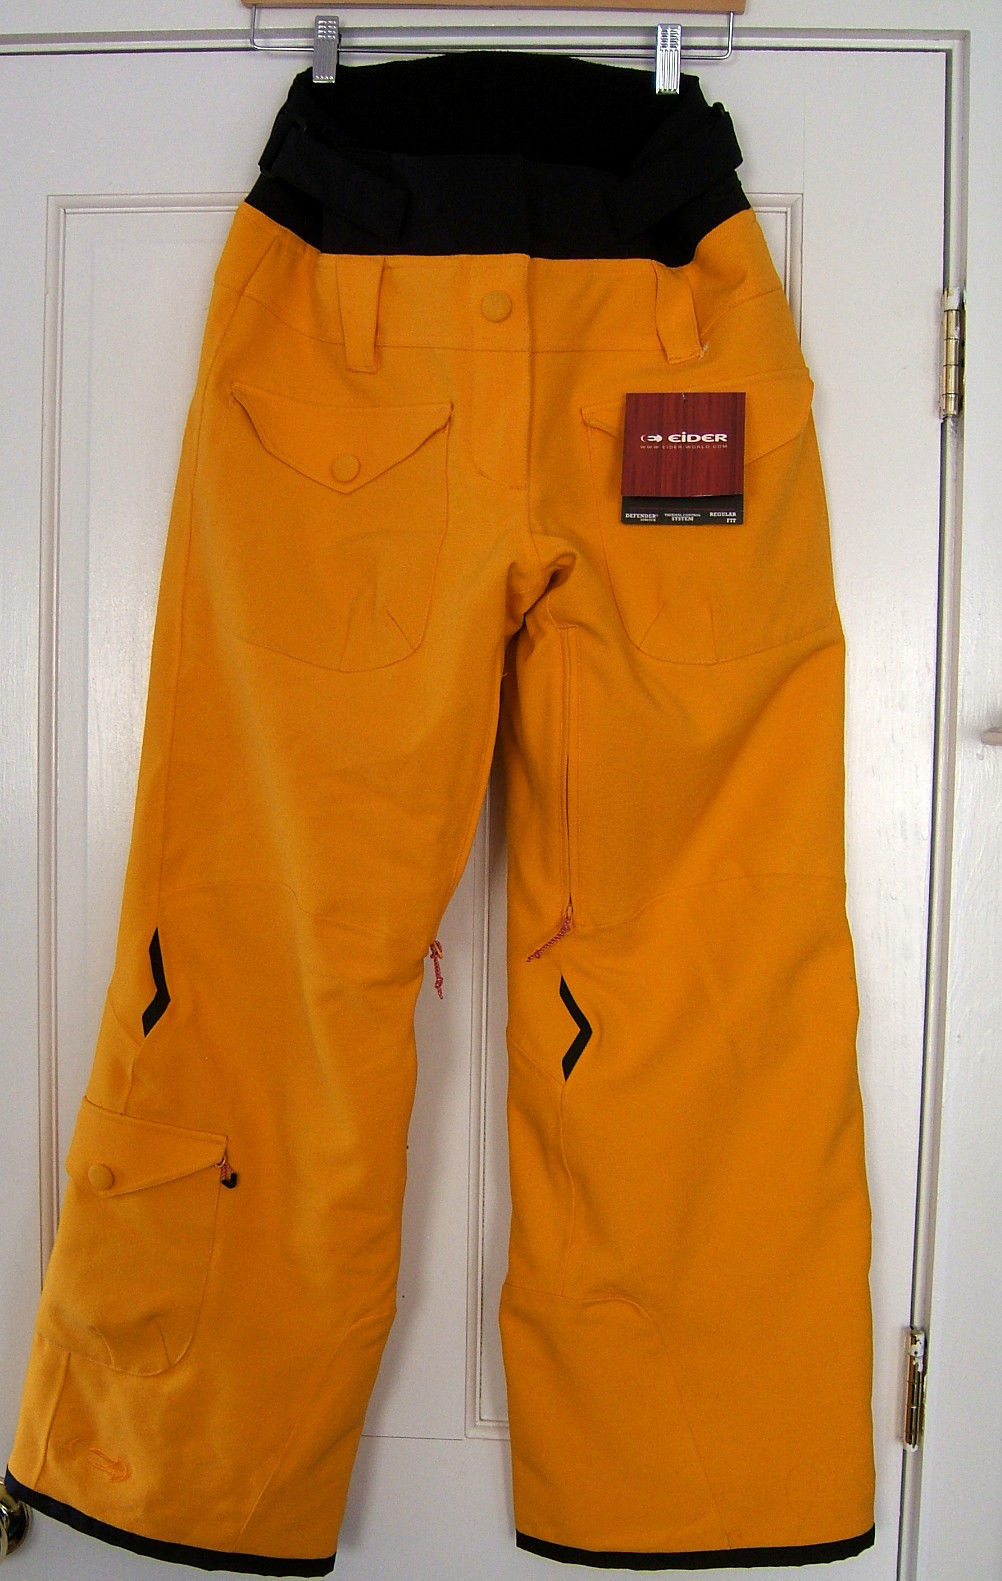 NWT EIDER CrestedButte W Weave Mountain Ski Pants Sun Yellow Black 42 10 $320 - $158.00